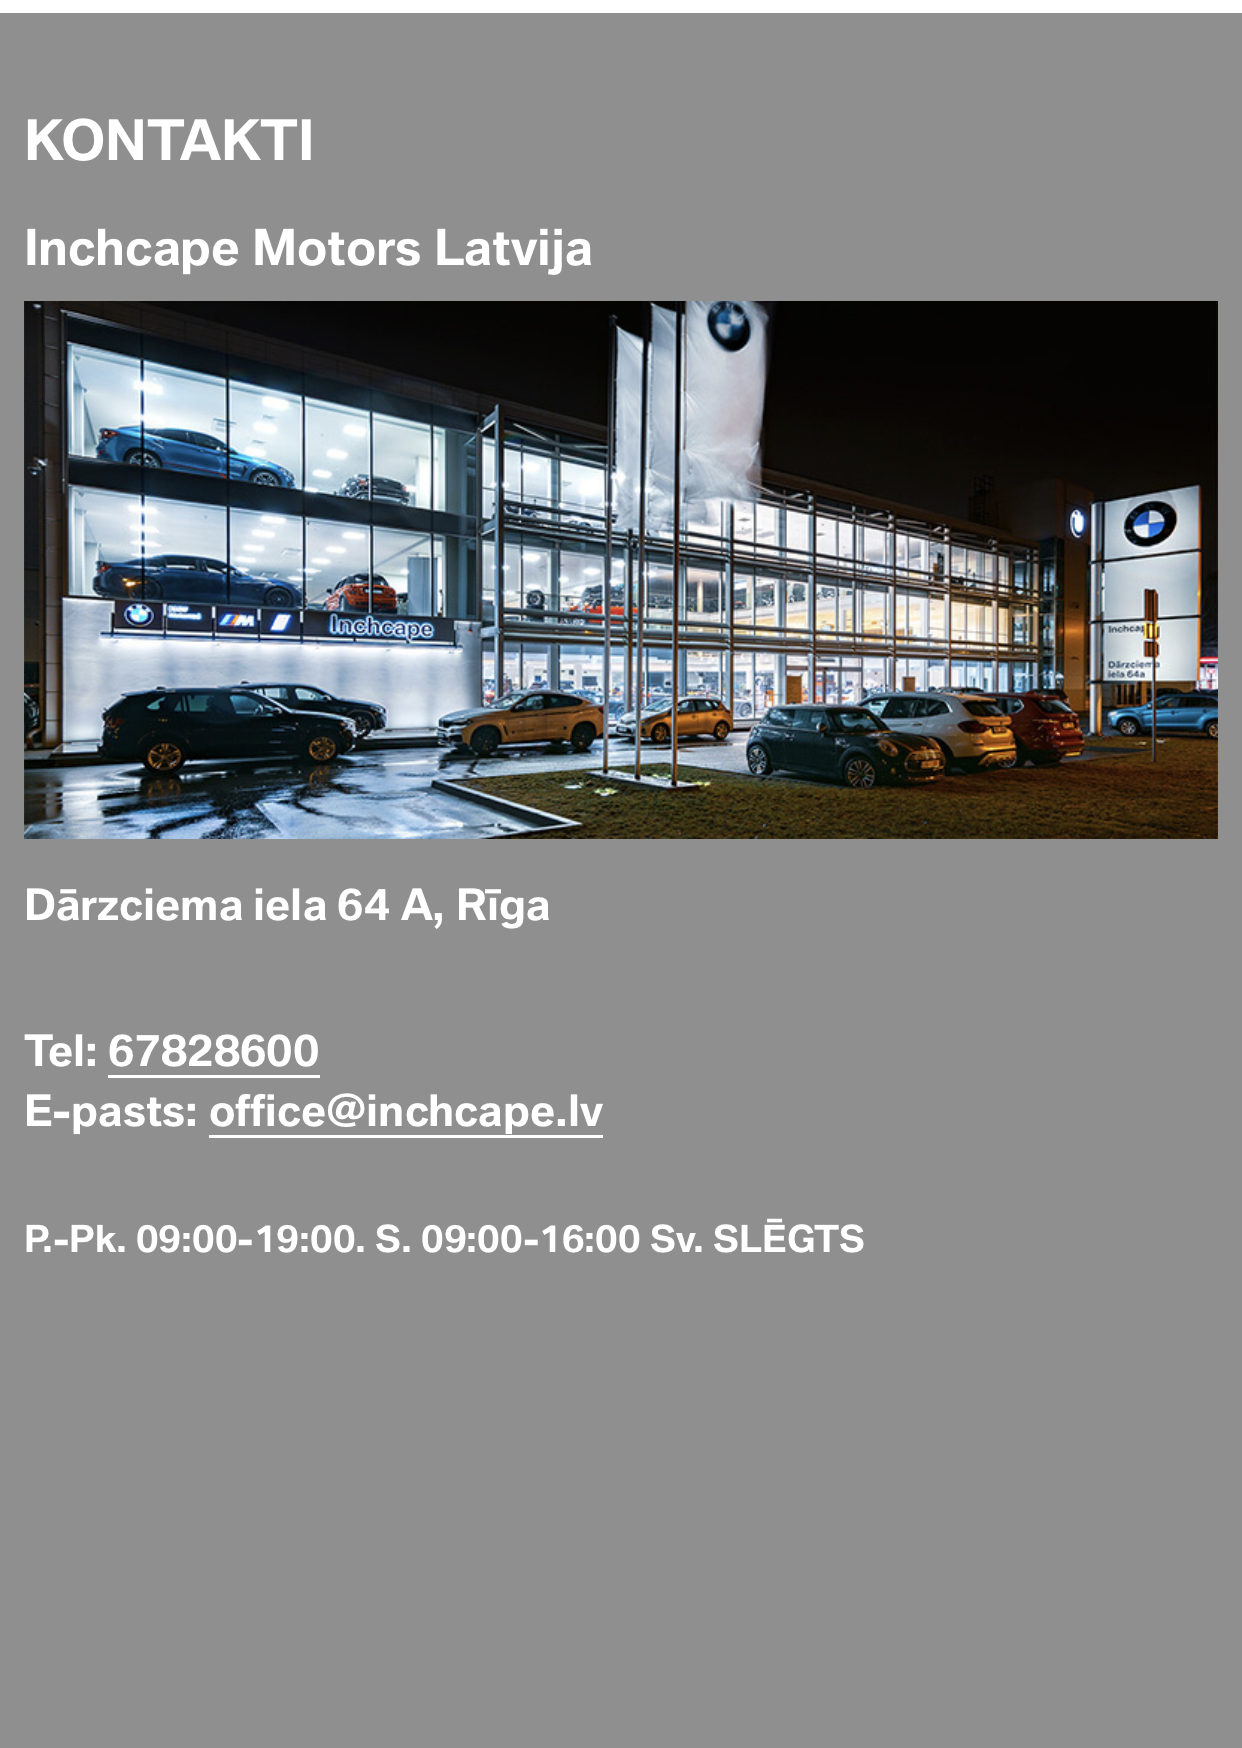 IEMAINI IERASTO PRET BMW!  Inchcape Motors Latvia.png